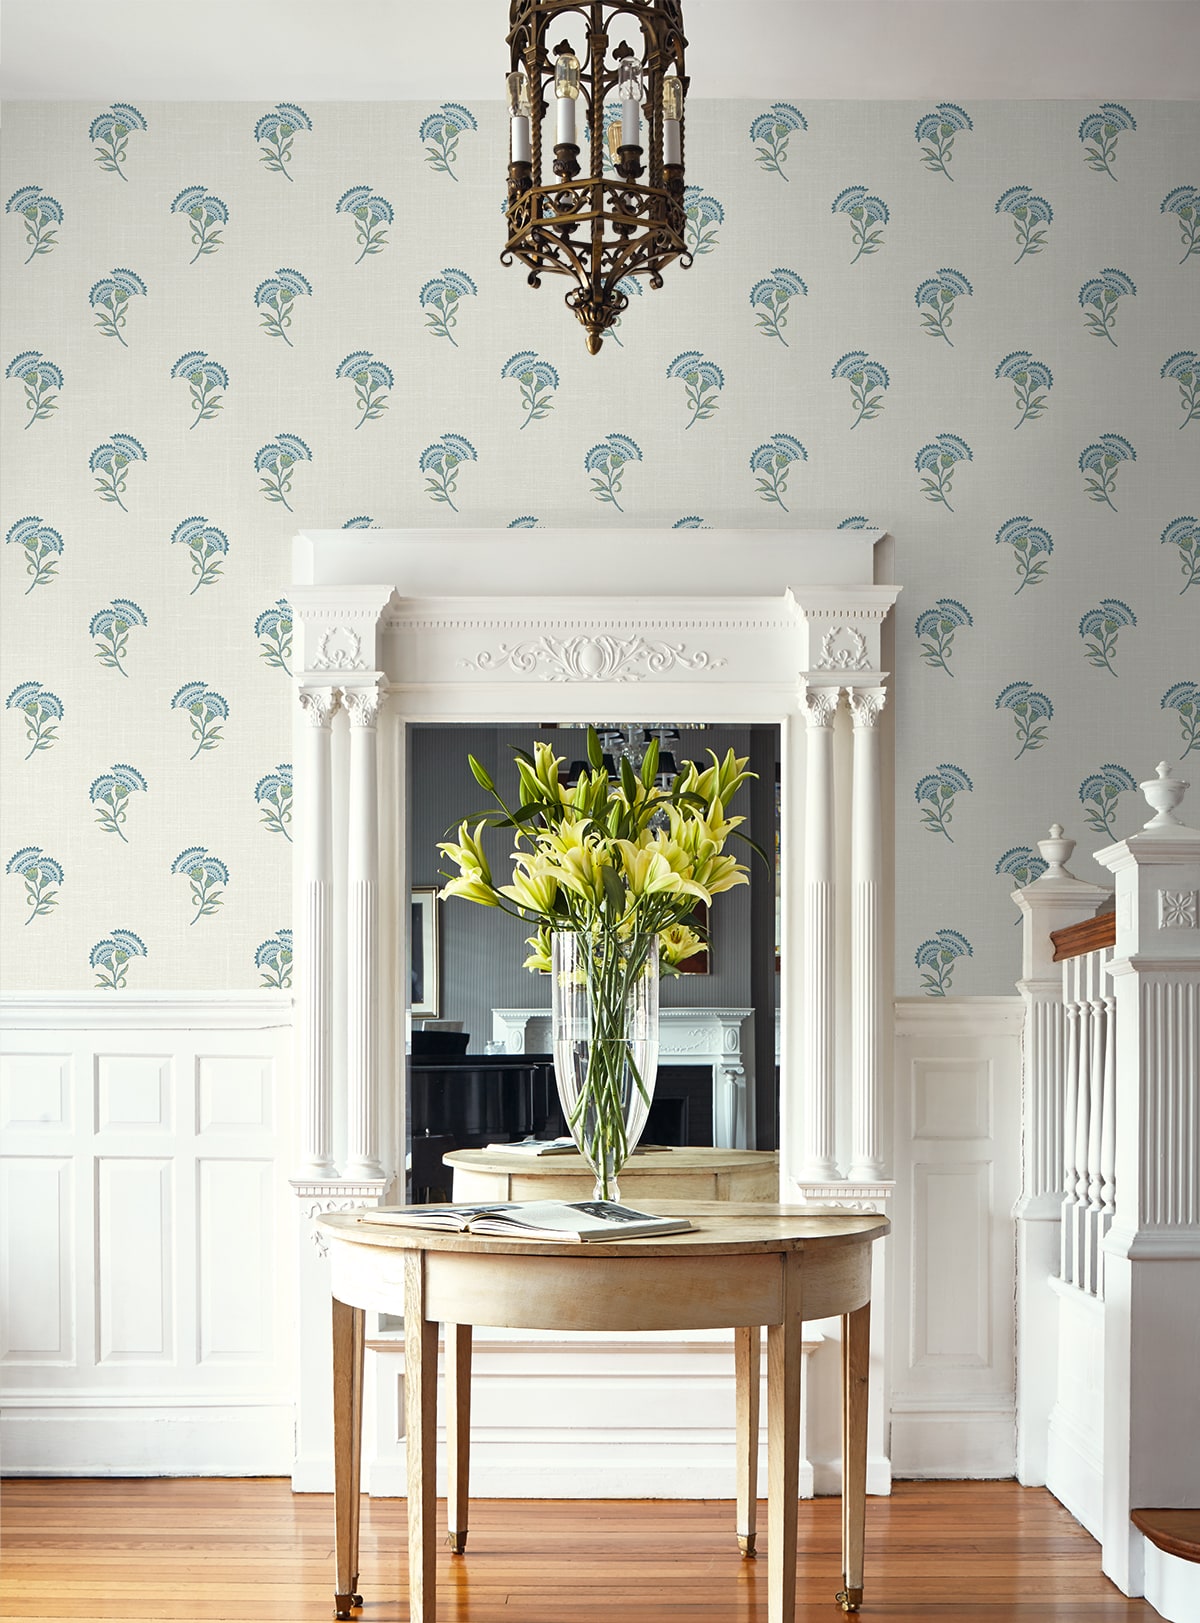 Lotus Floral AI42305 Seabrook Wallpaper